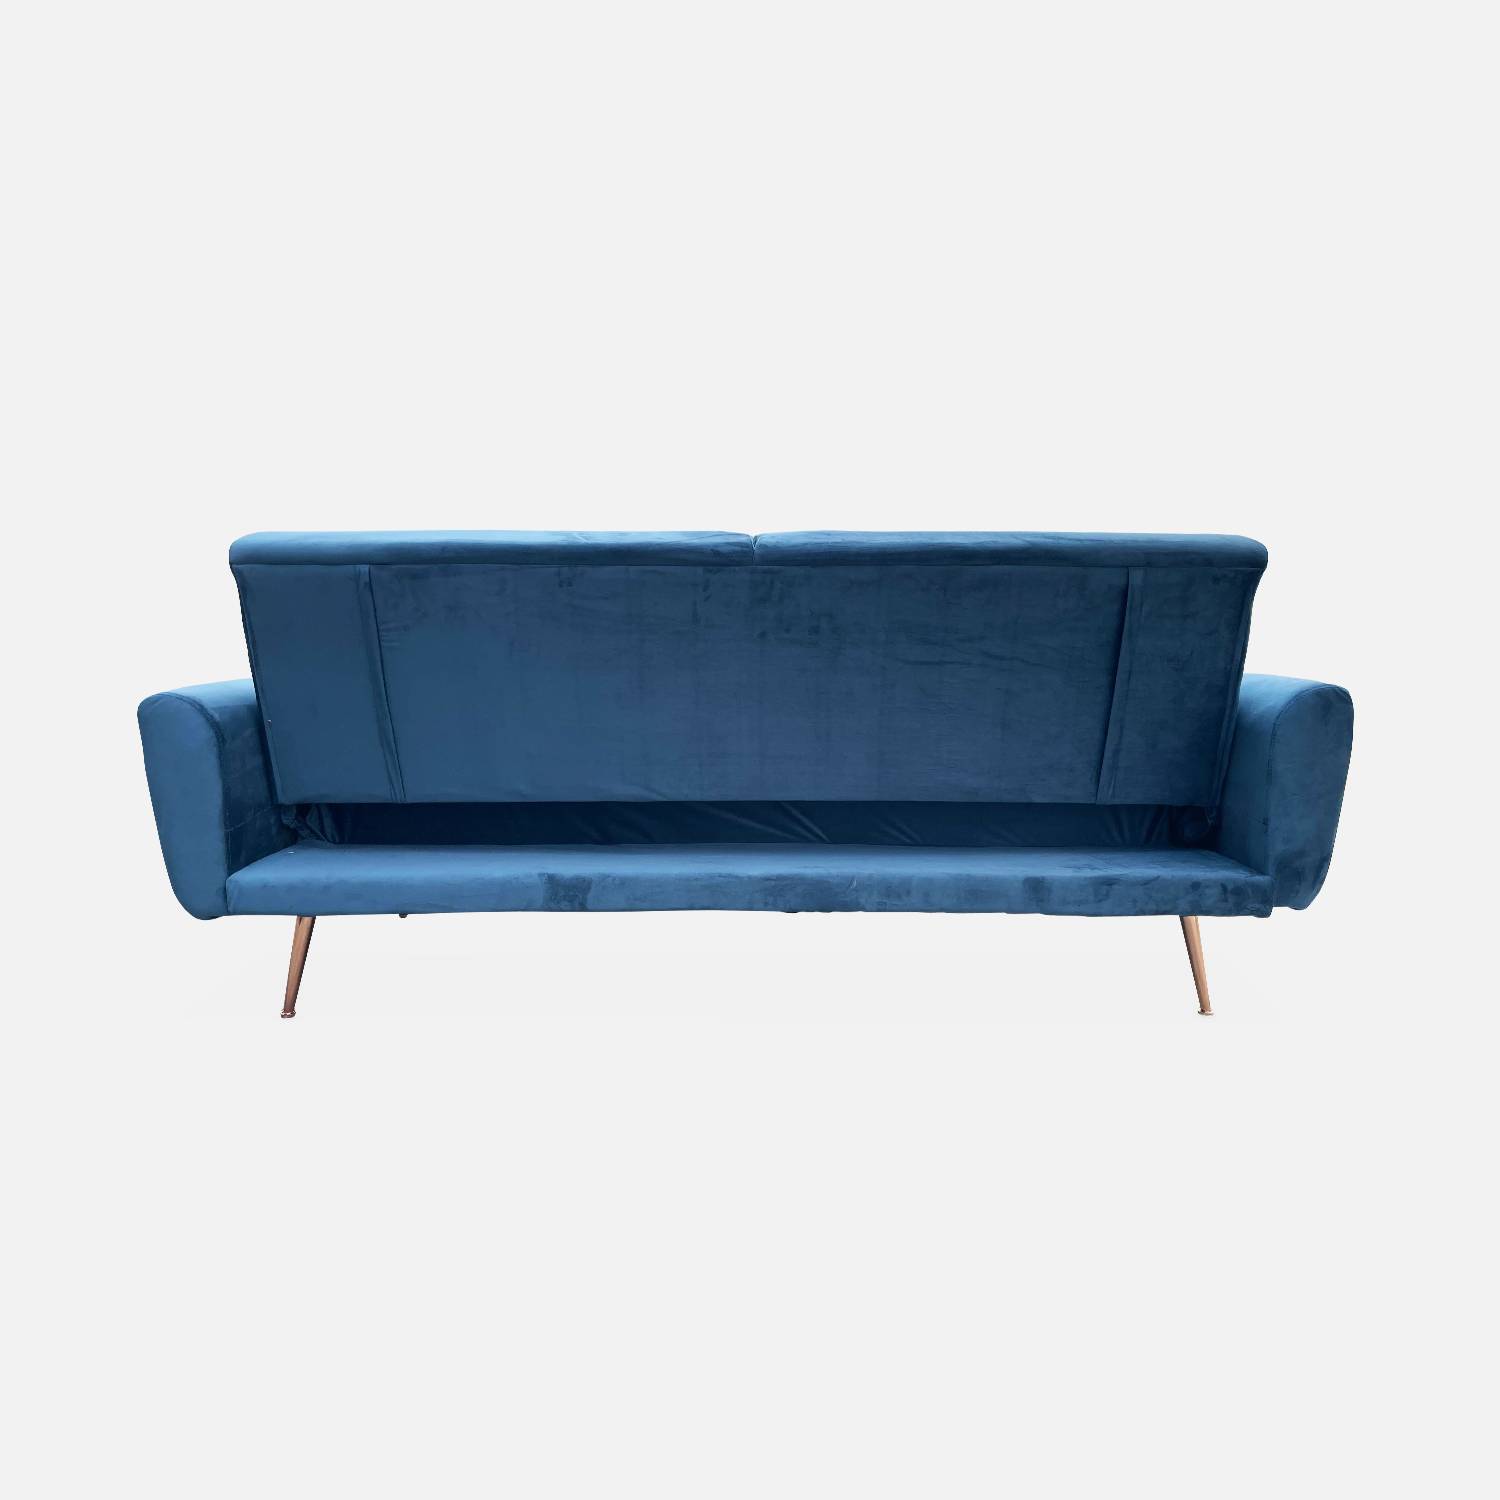 Design Sofa ausziehbar aus Samt - Oskar - 2 - 3 Sitzer skandinavischischer Stil mit dünnen roségoldenen Beinen Photo5